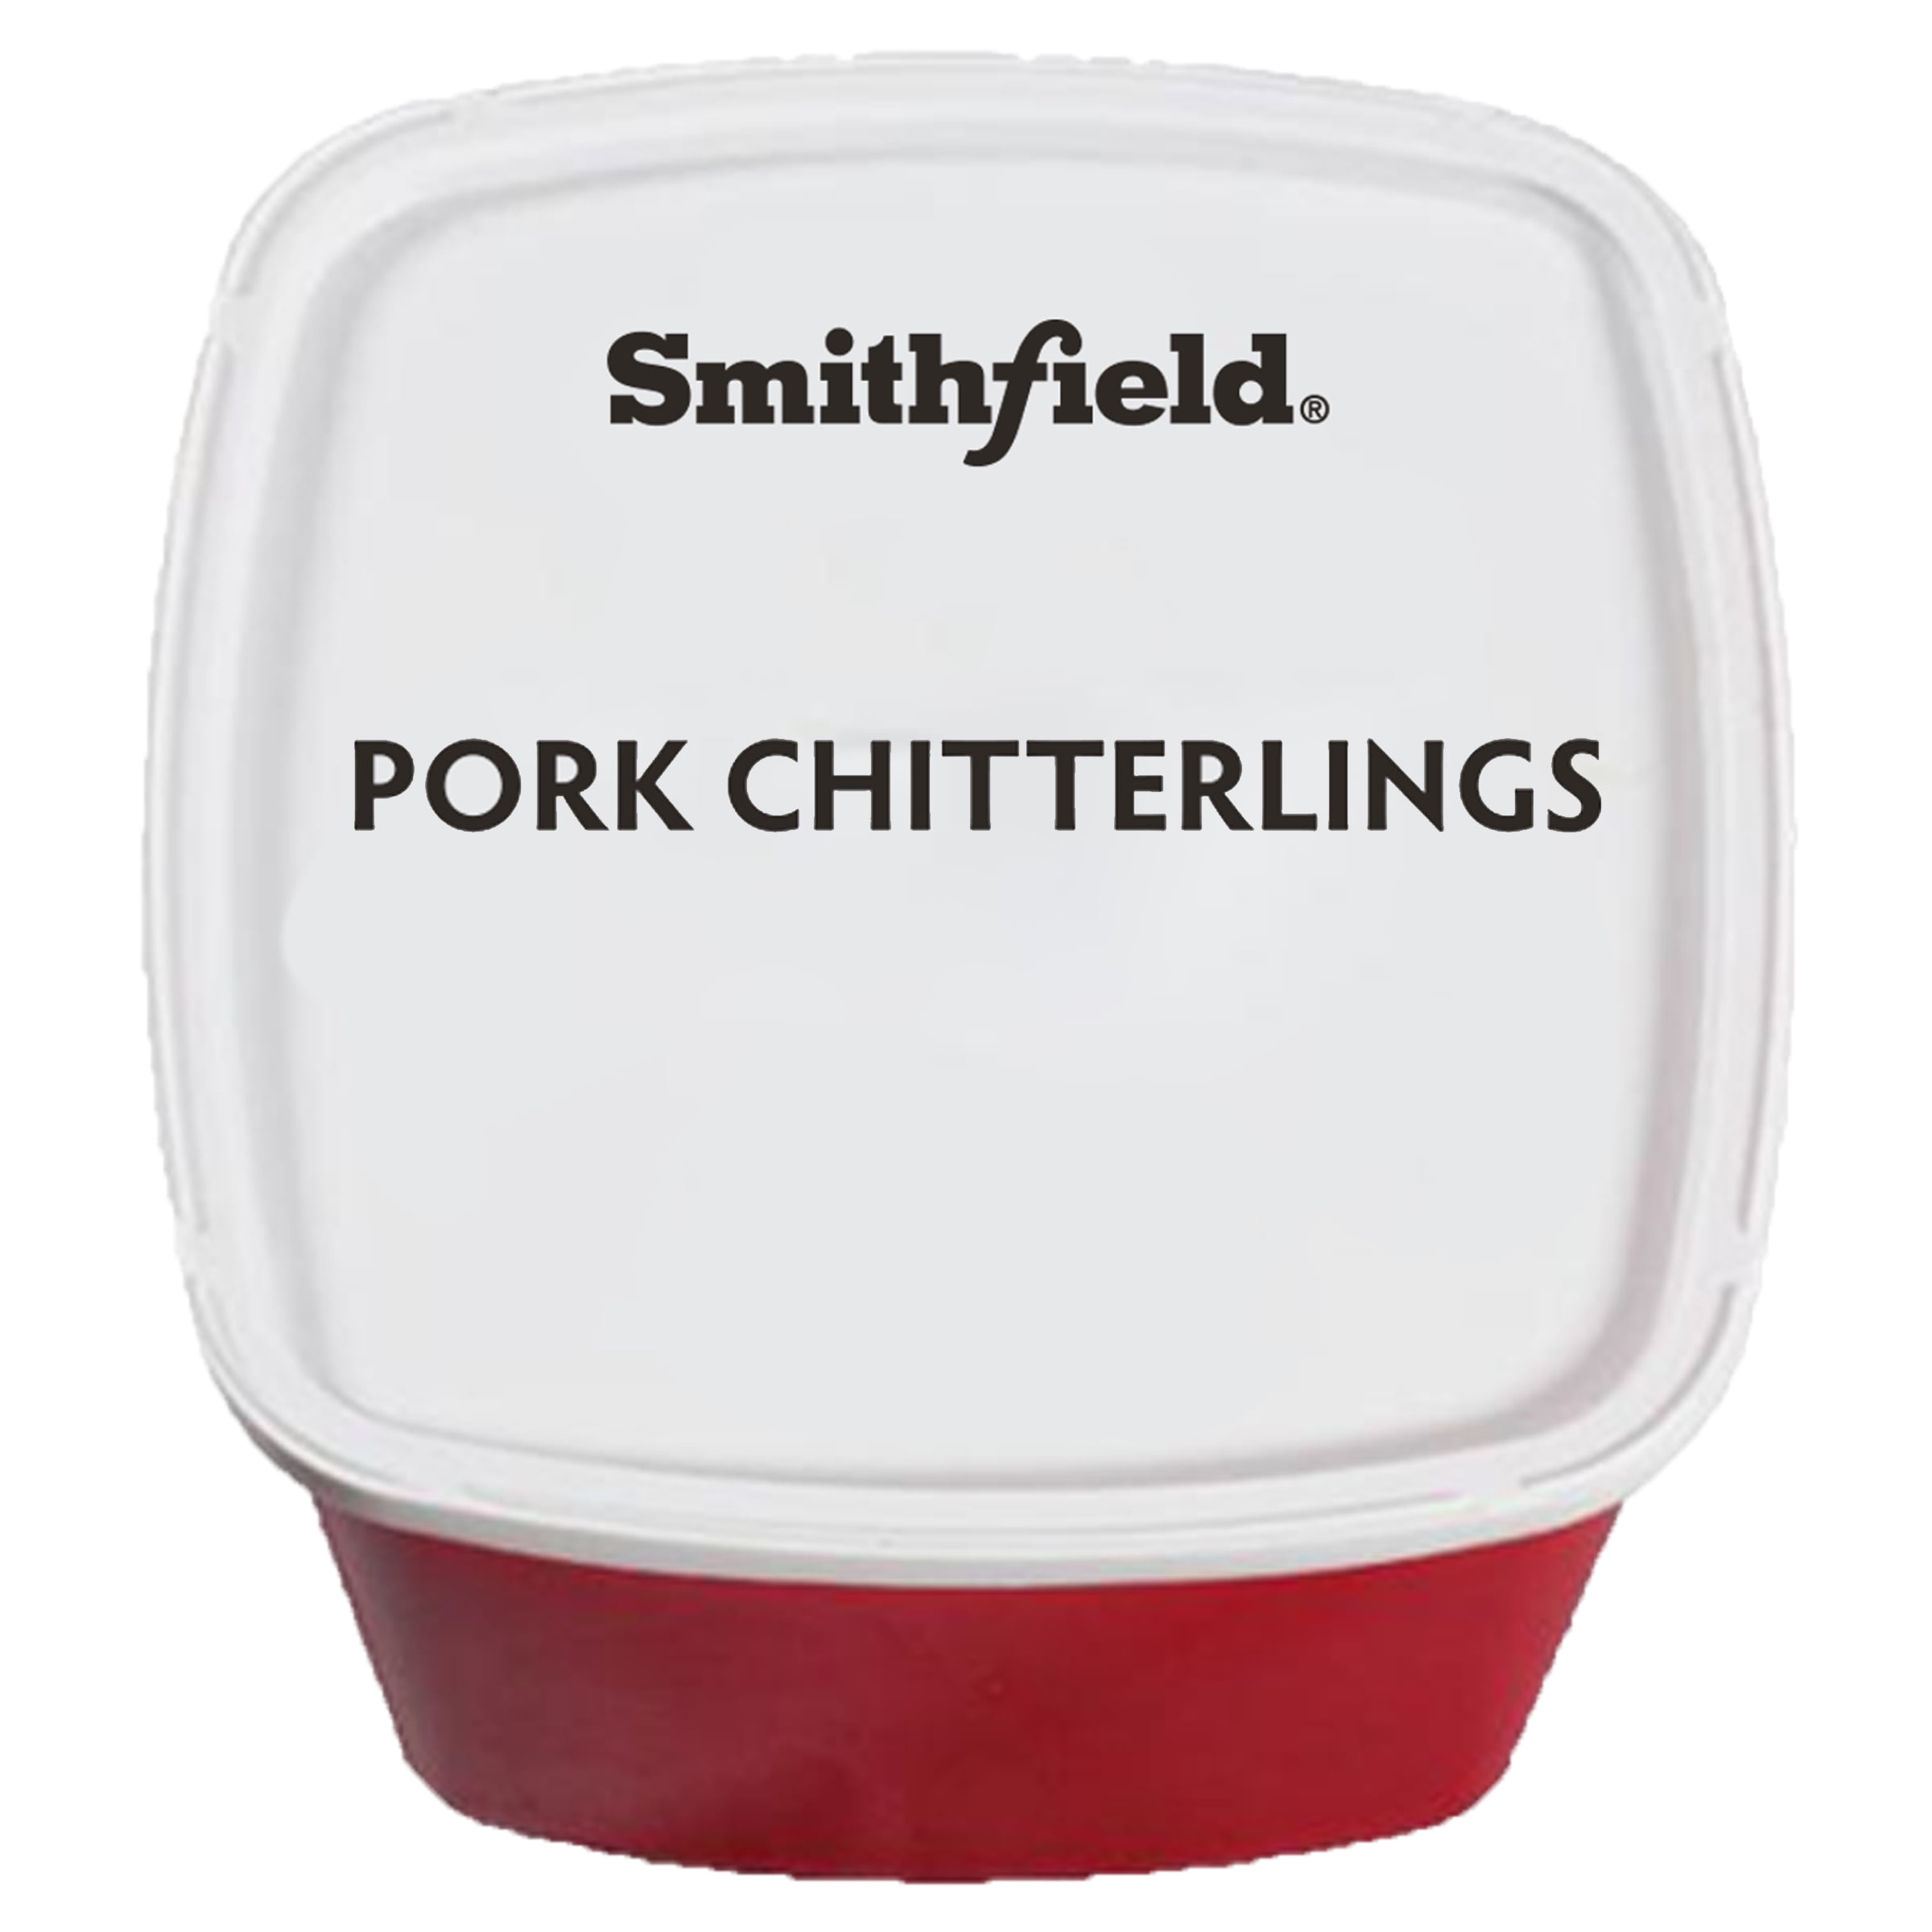 Uncle Lou's Chitlins Super Premium Pork Chitterlings, 5 lbs